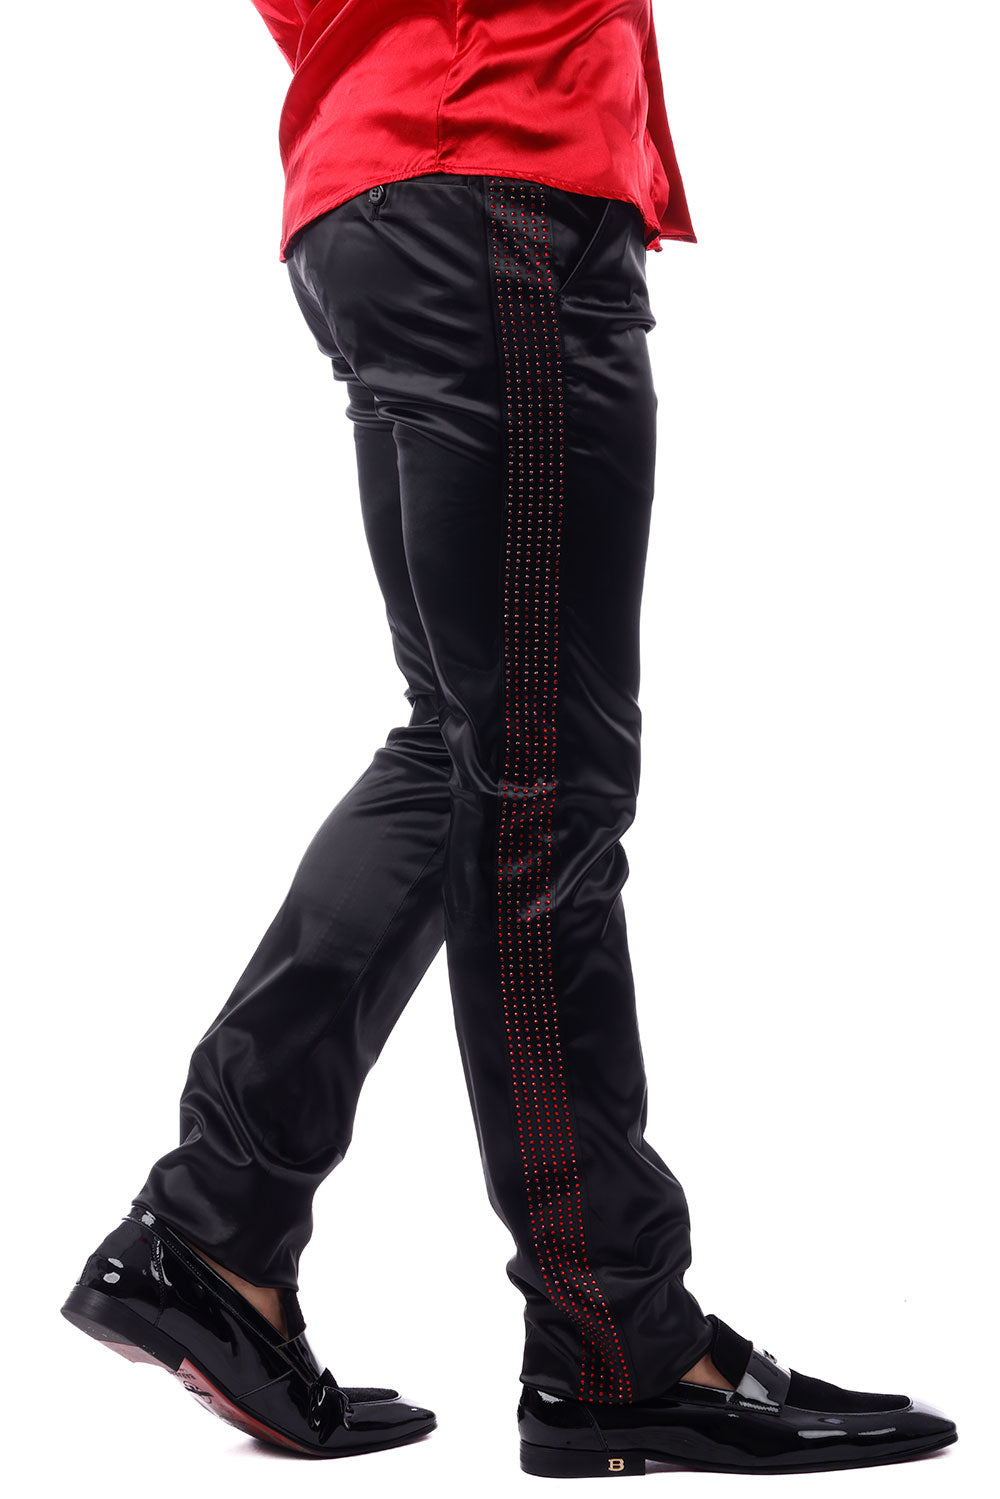 Barabas Men's Rhinestone Shinny Chino Dress Black Red Pants 1815 Black Red